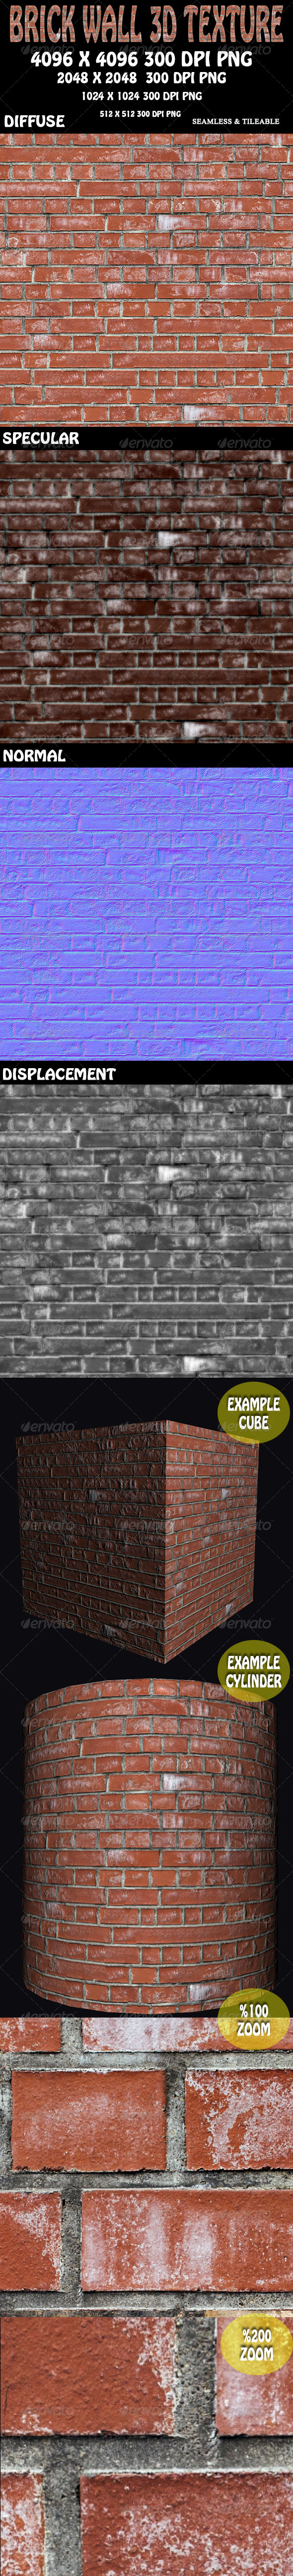 Brick Wall 3D - 3Docean 8142297